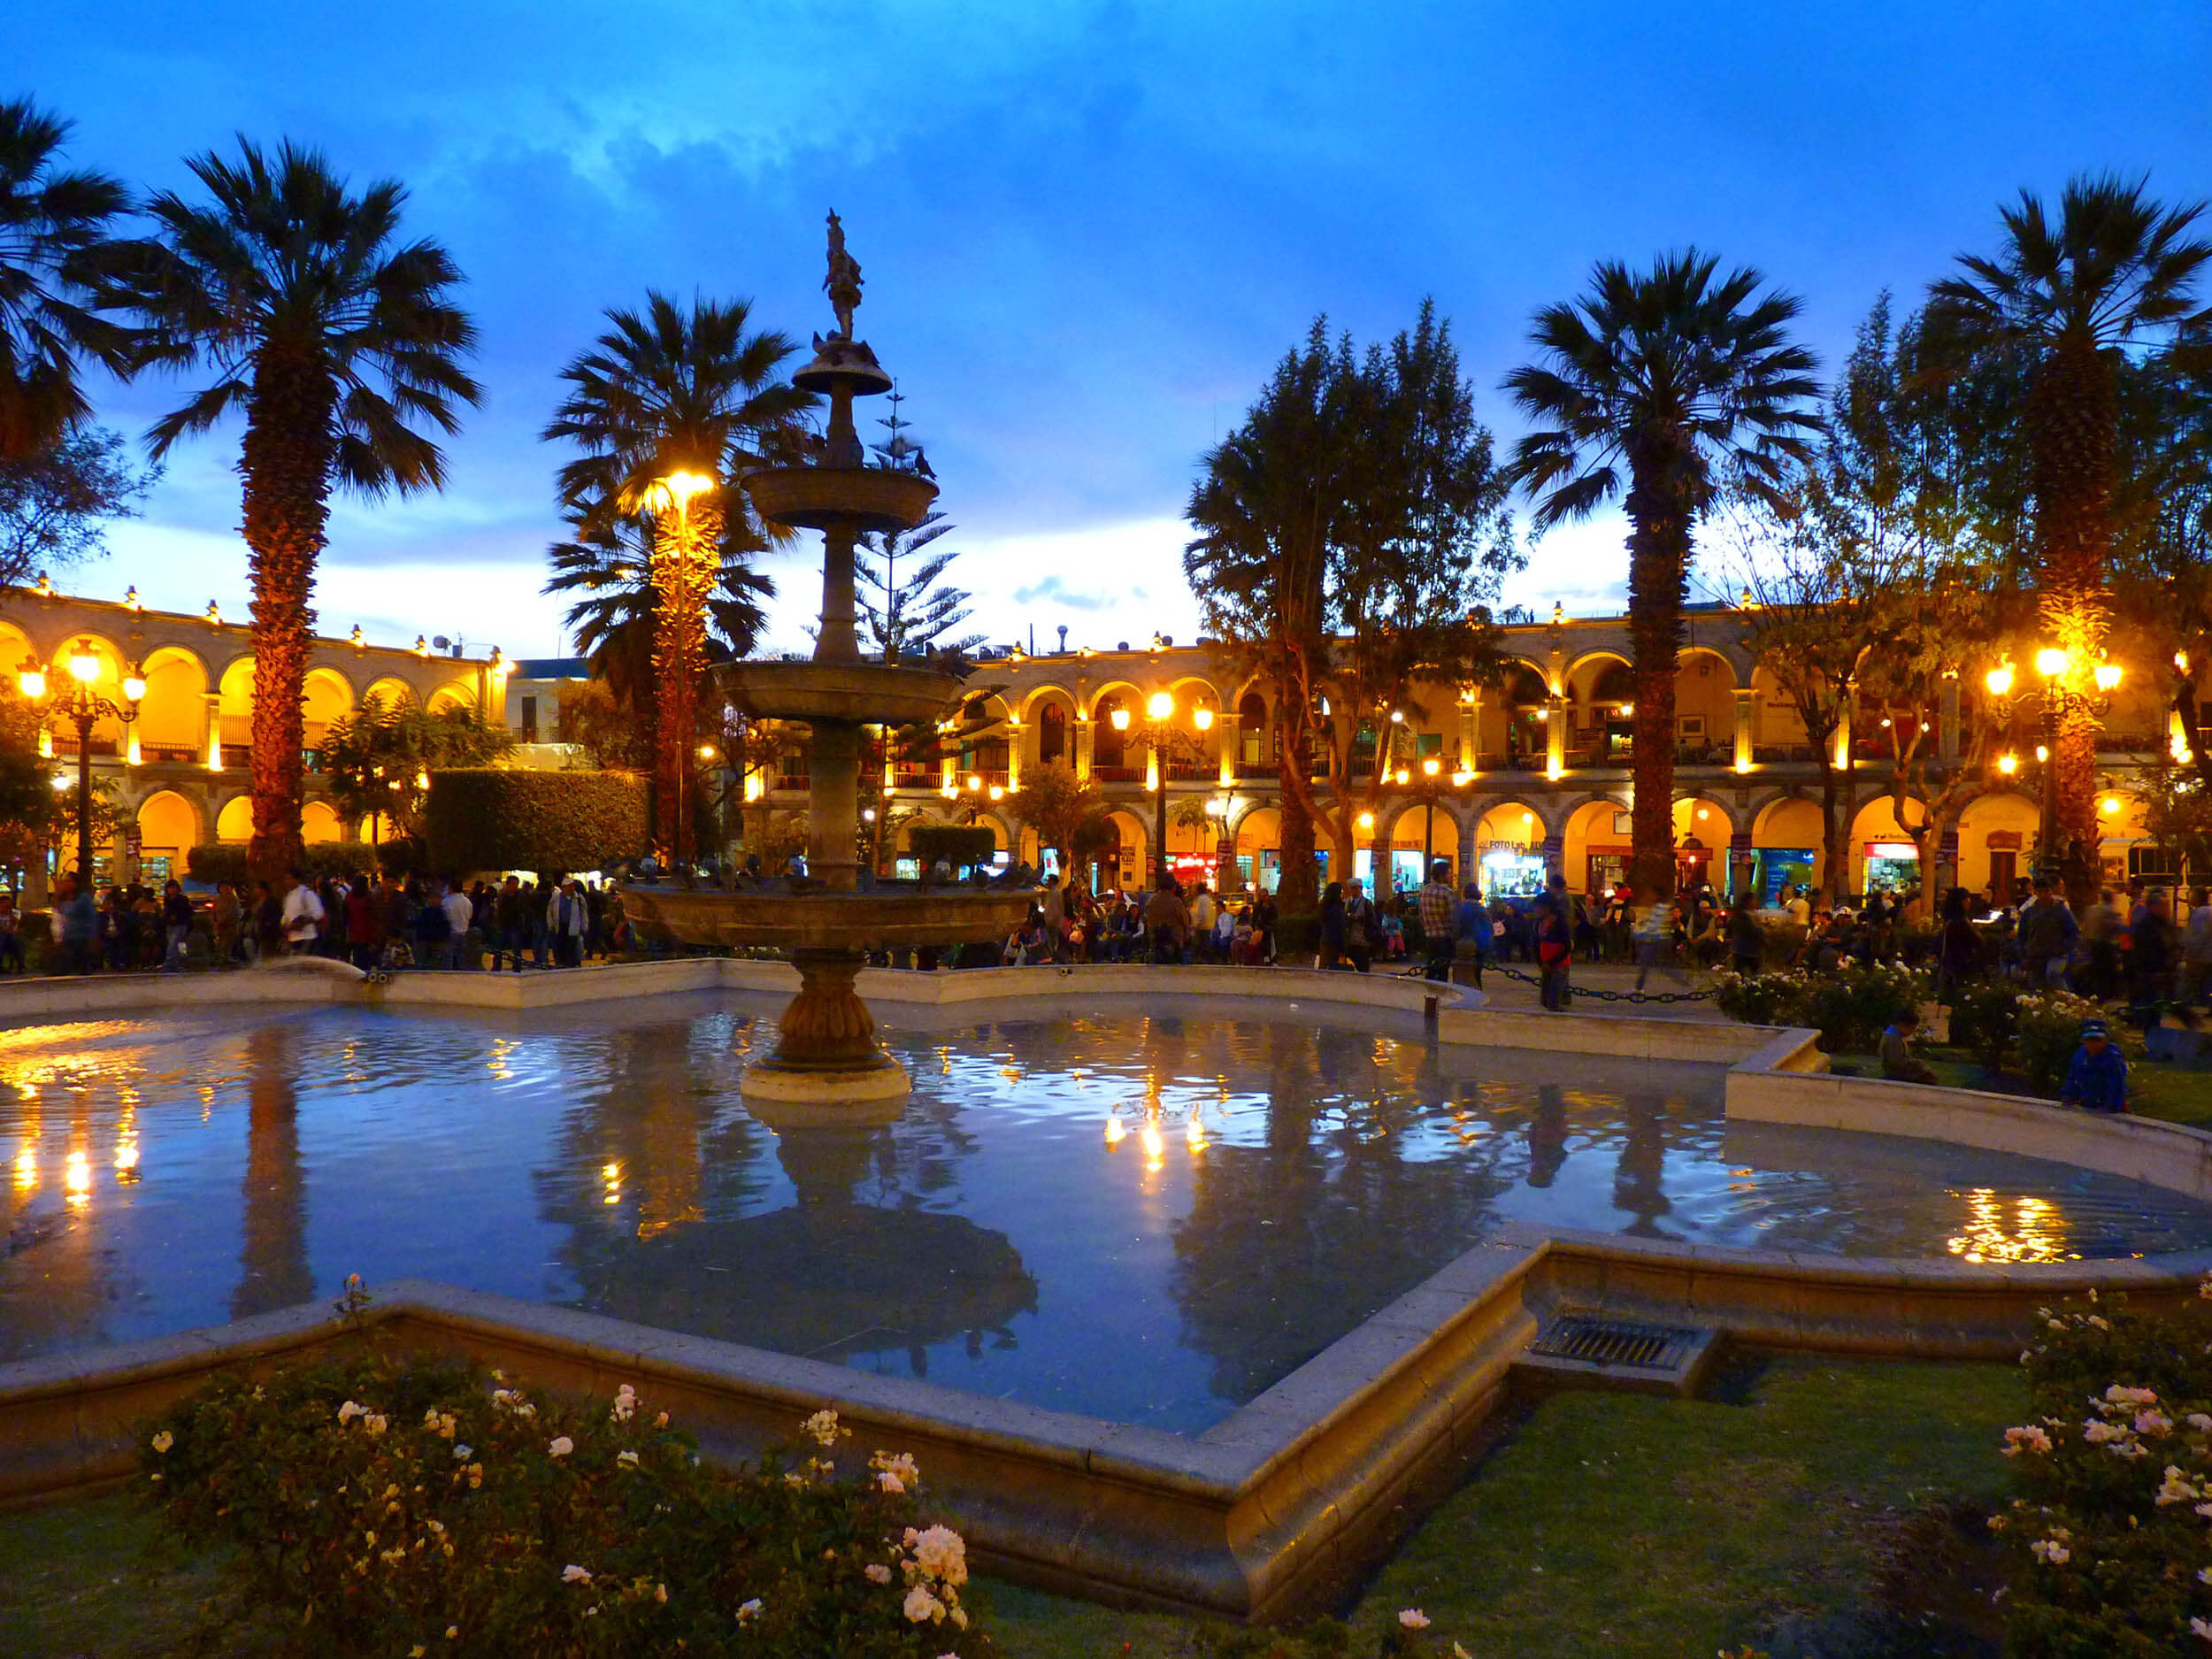 The beautiful Main Square of Arequipa